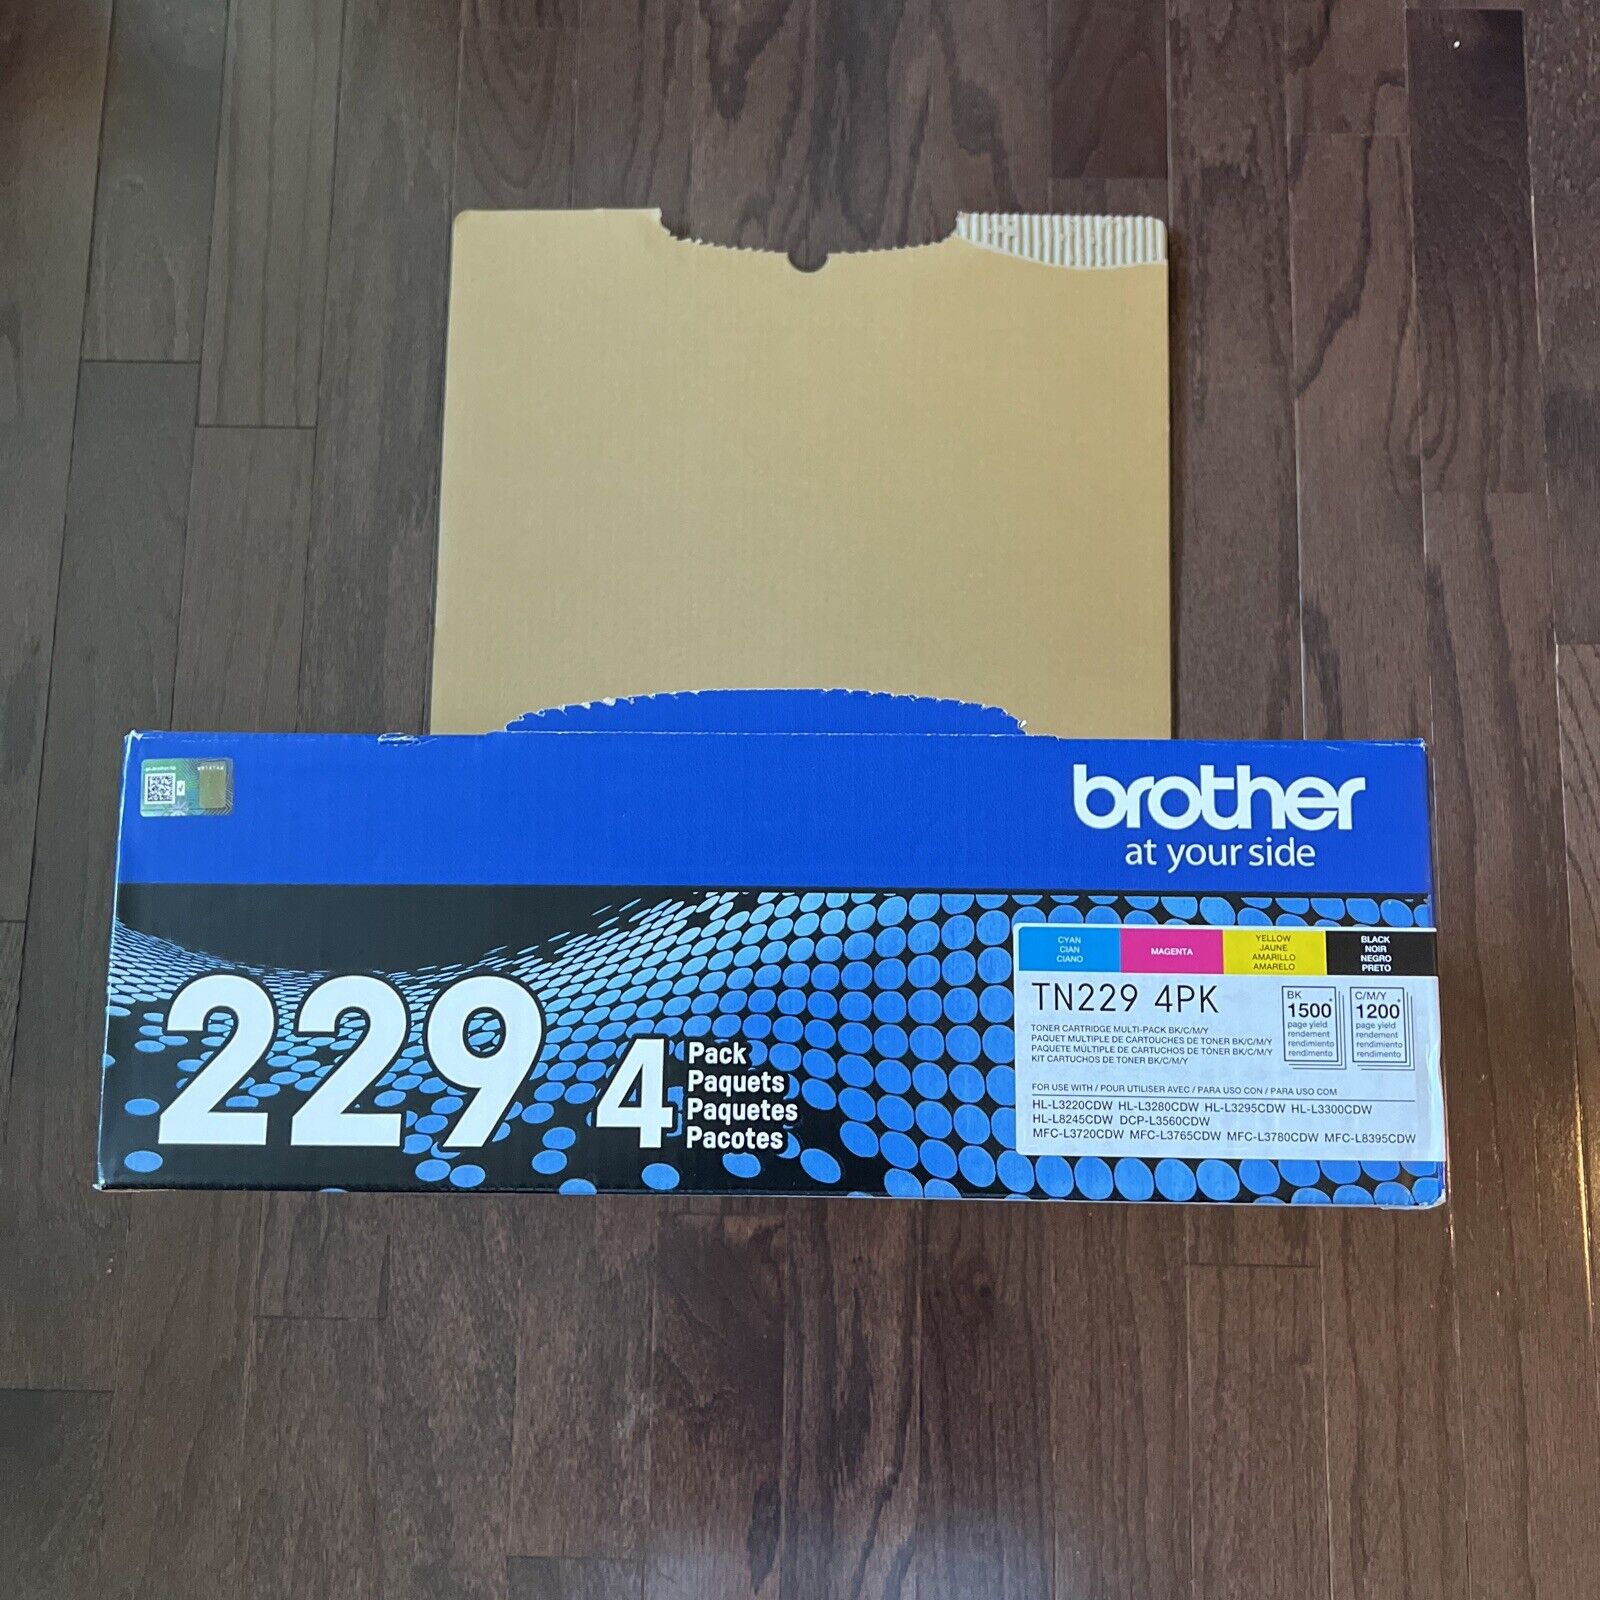 Brother Genuine TN229 4PK Printer Toner Cartridges OEM TN 229 4 Pack - SEALED